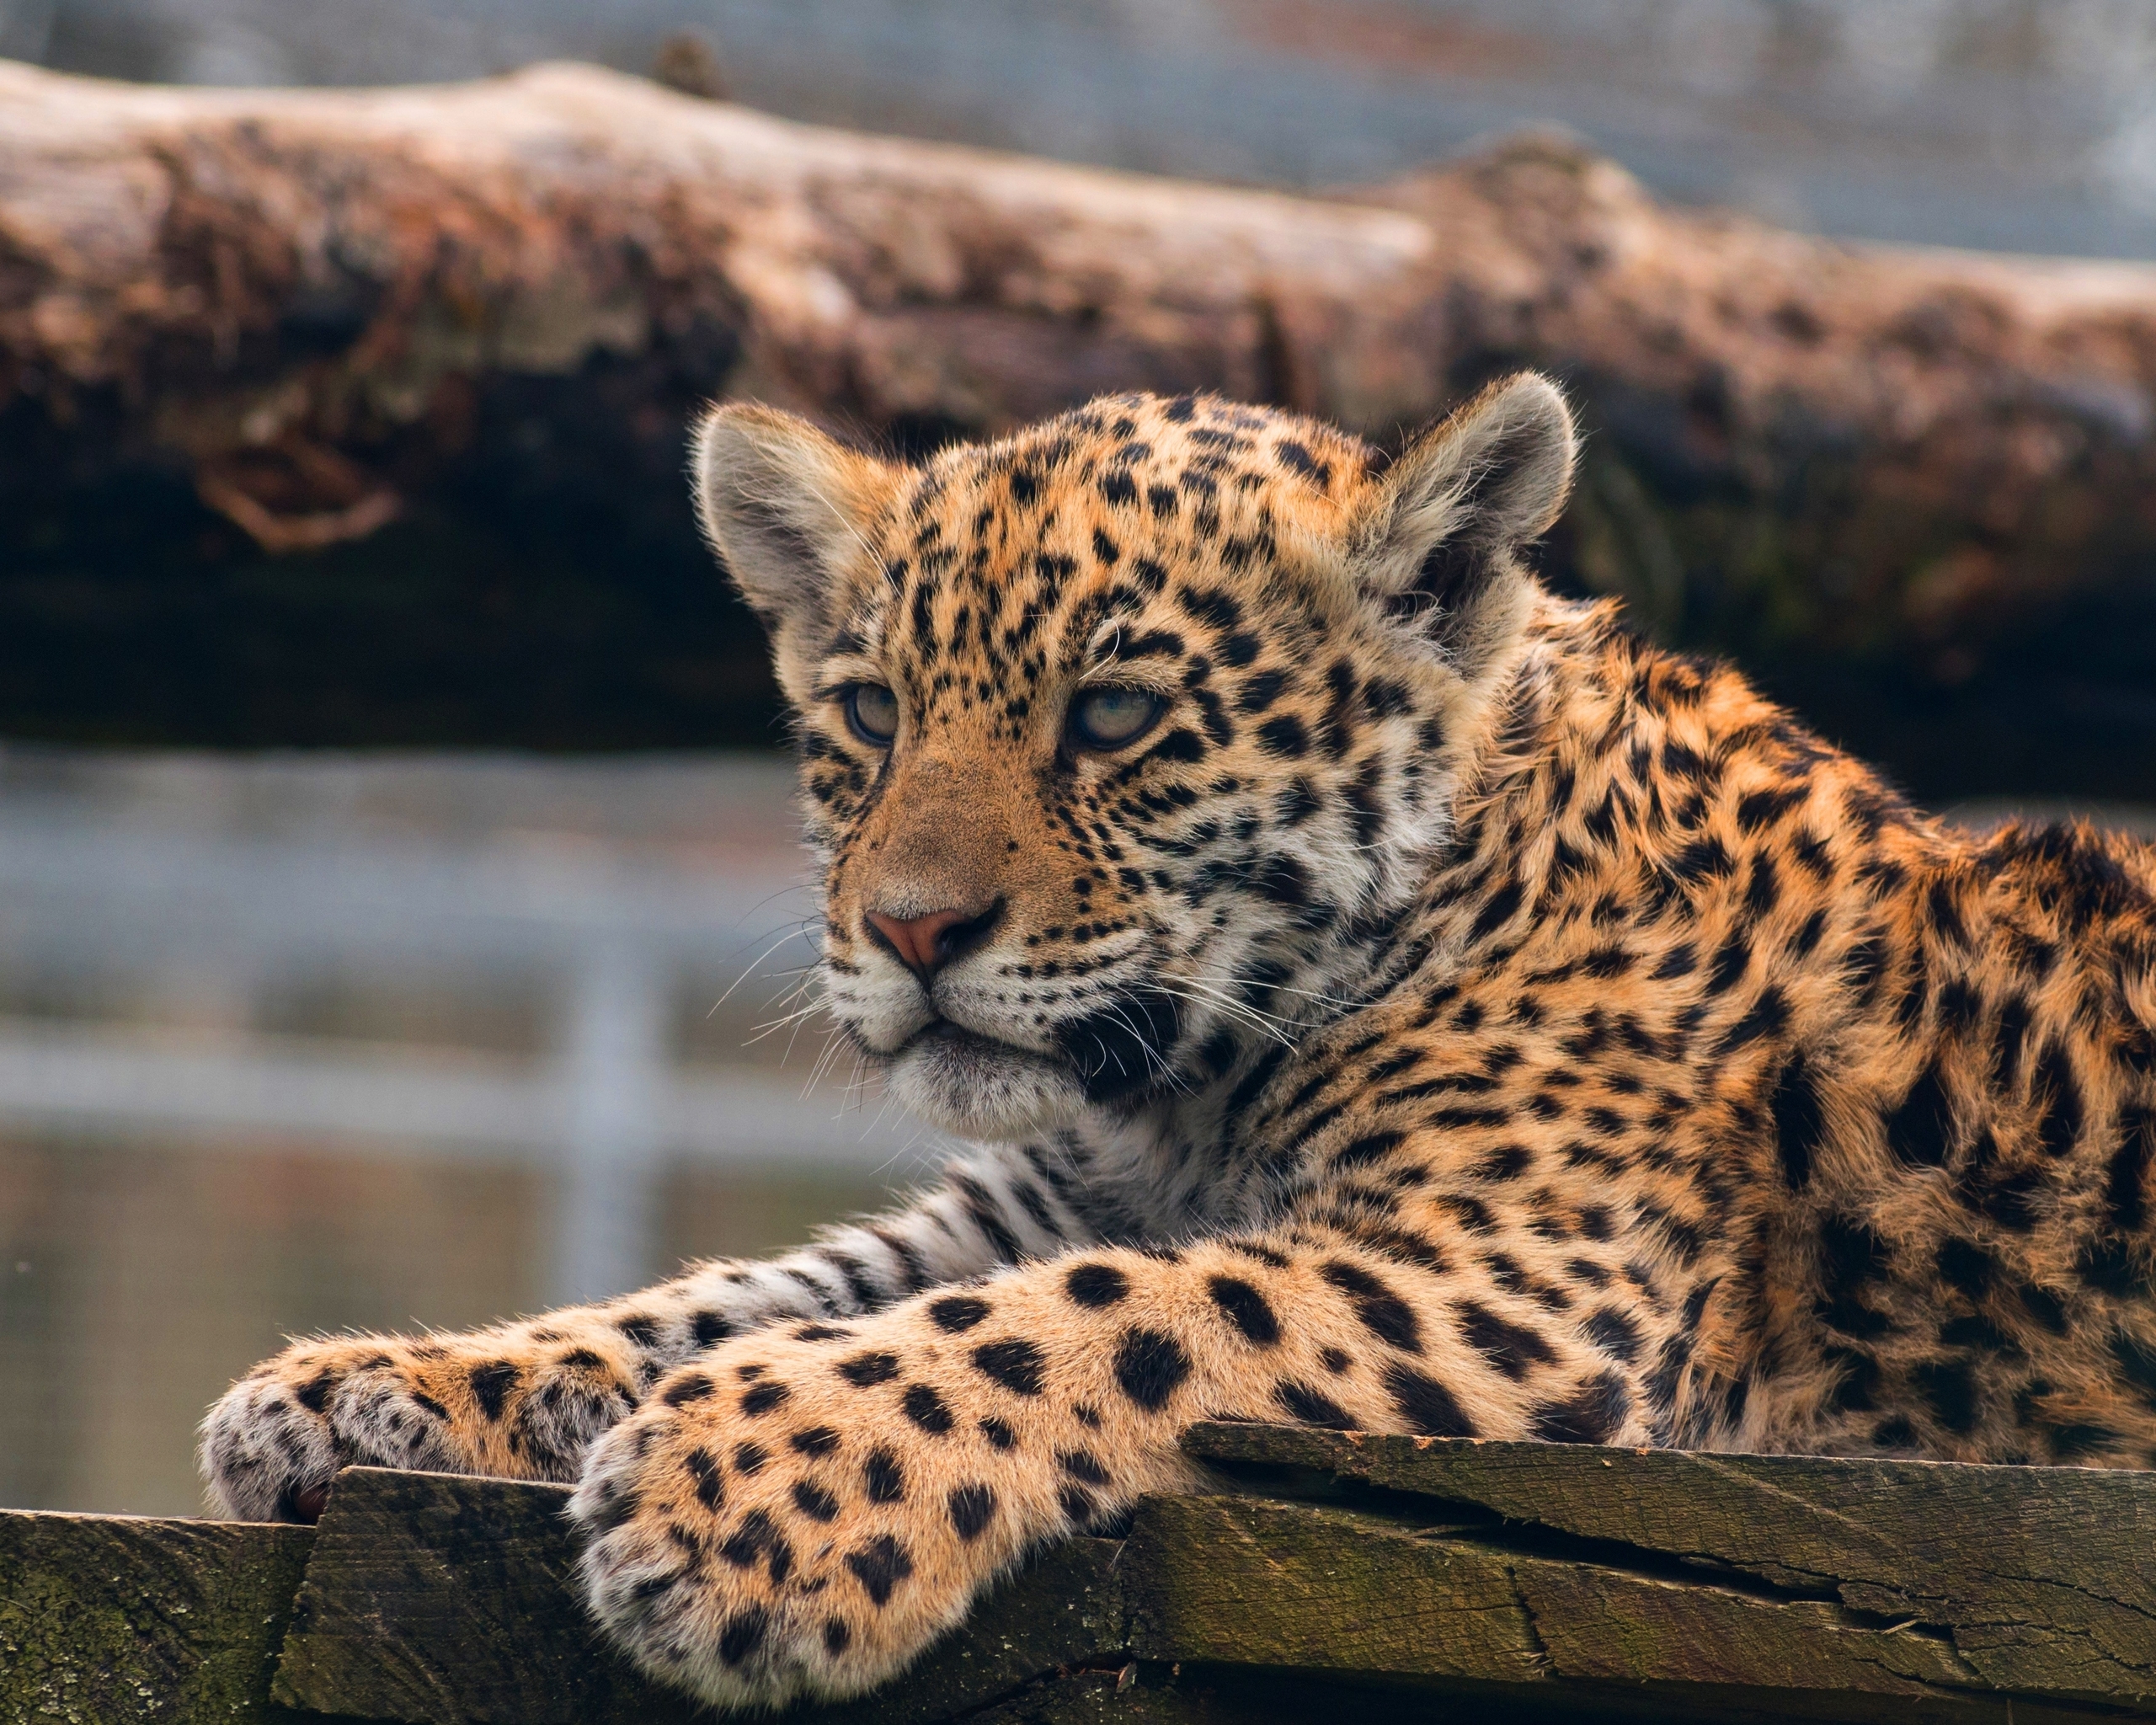 Image: Cat, cub, leopard, lying, paws, boards, tree, predator